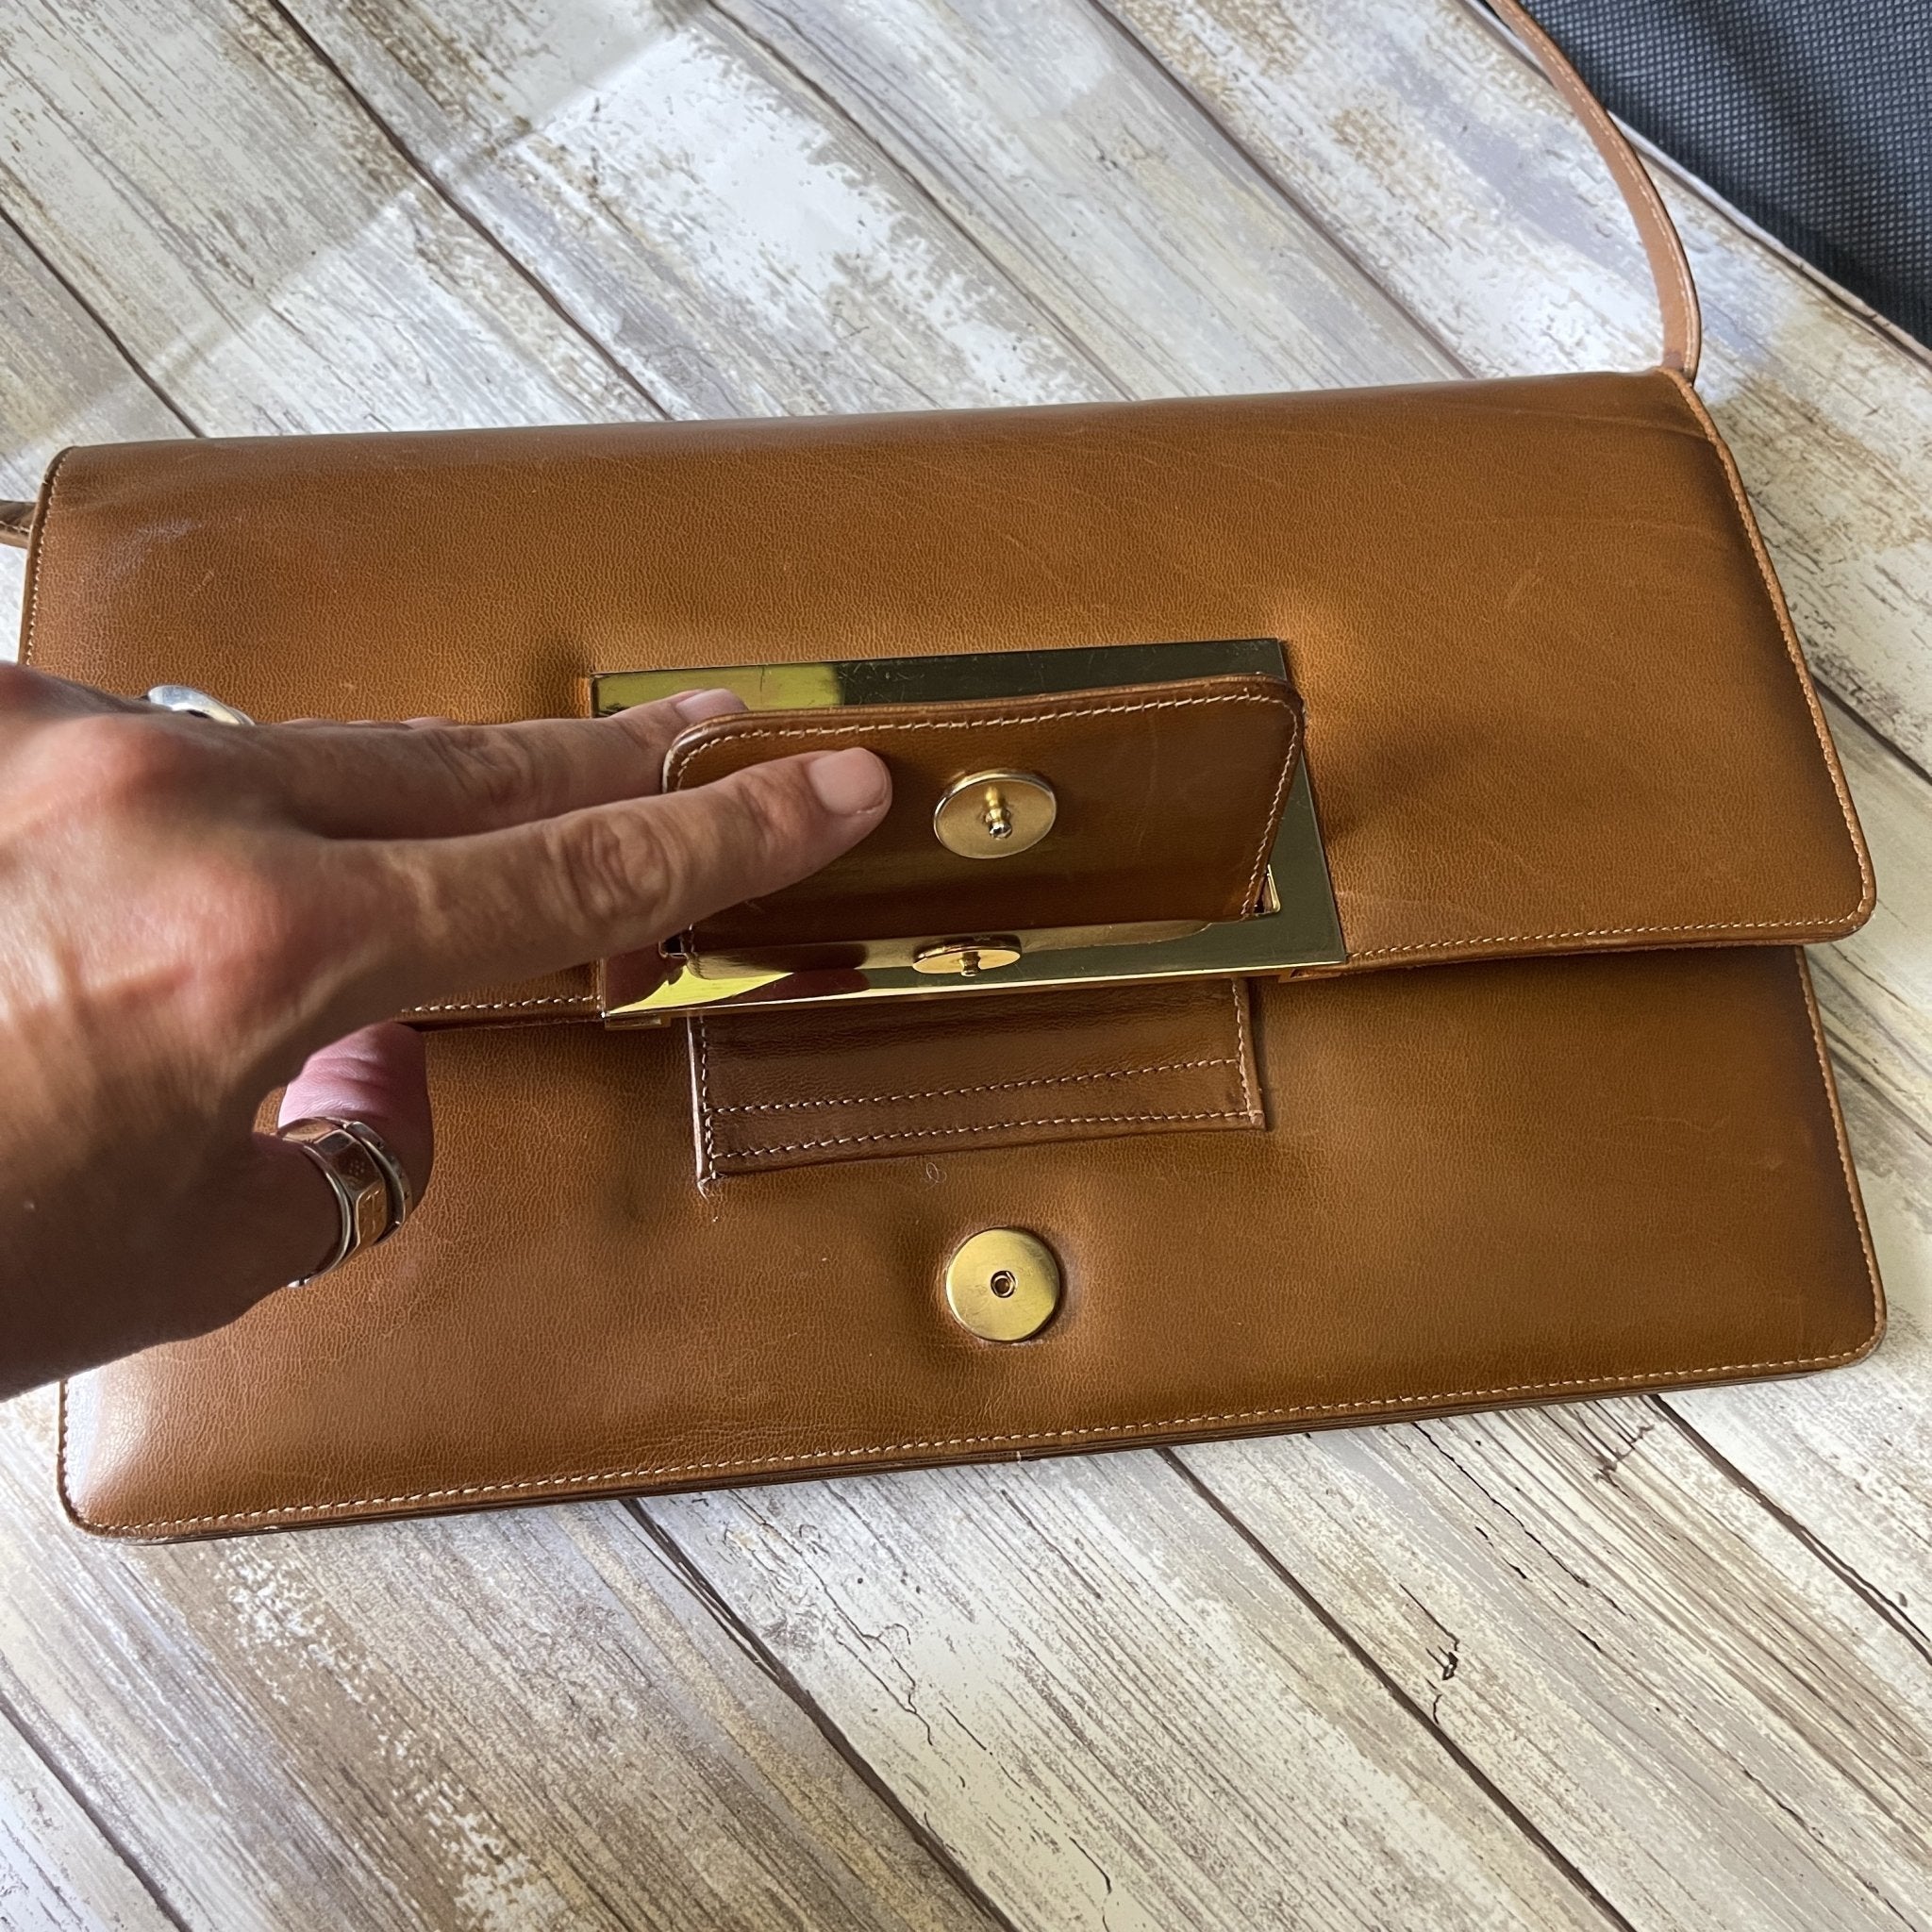 Vintage Brown Leather Clutch or Purse from Saks Fifth Avenue. Sleek En